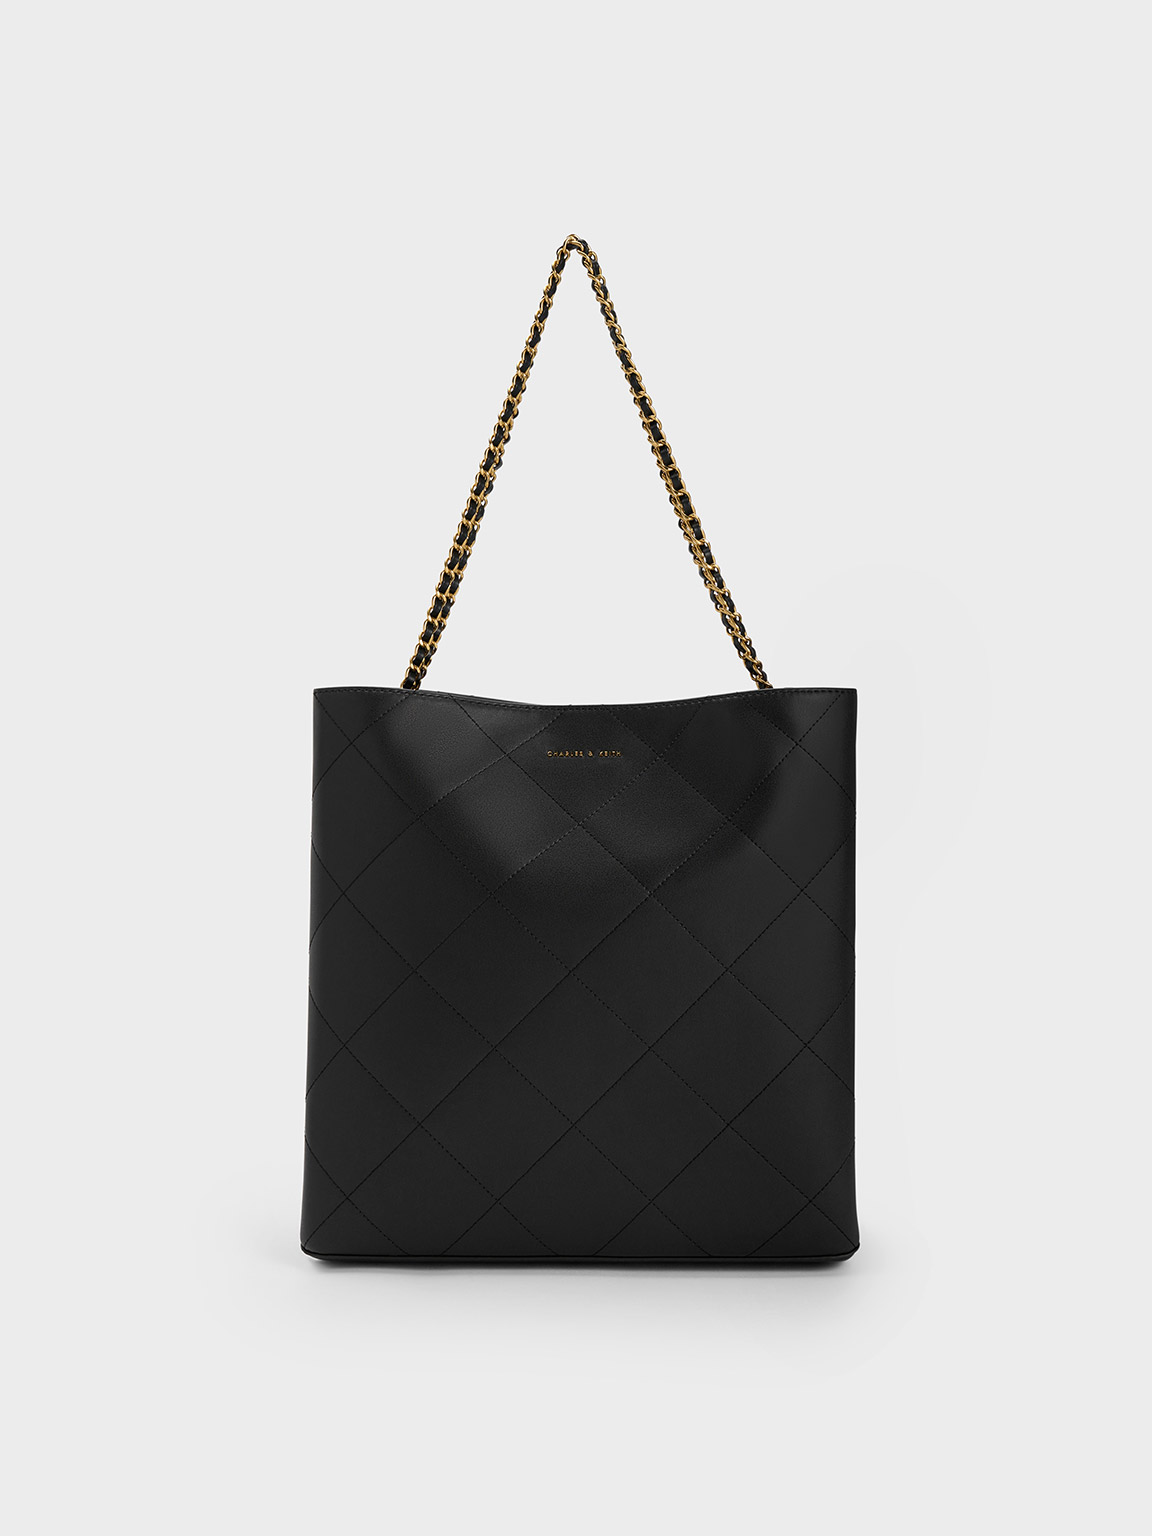 Women's Black Leather Tote Bag  Handcrafted in Nashville – Loyal Stricklin